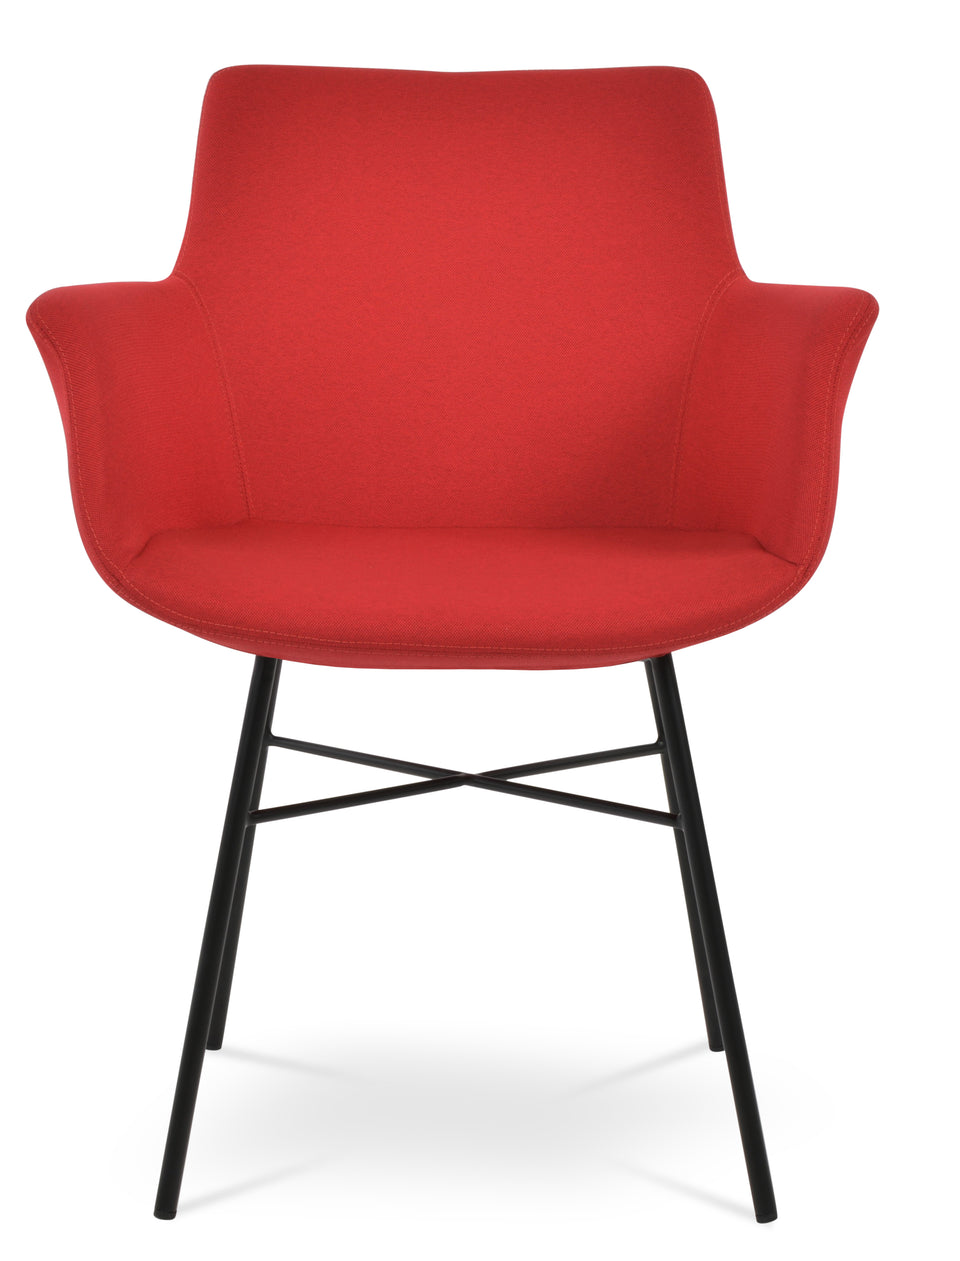 Bottega Arm Cross Chair.